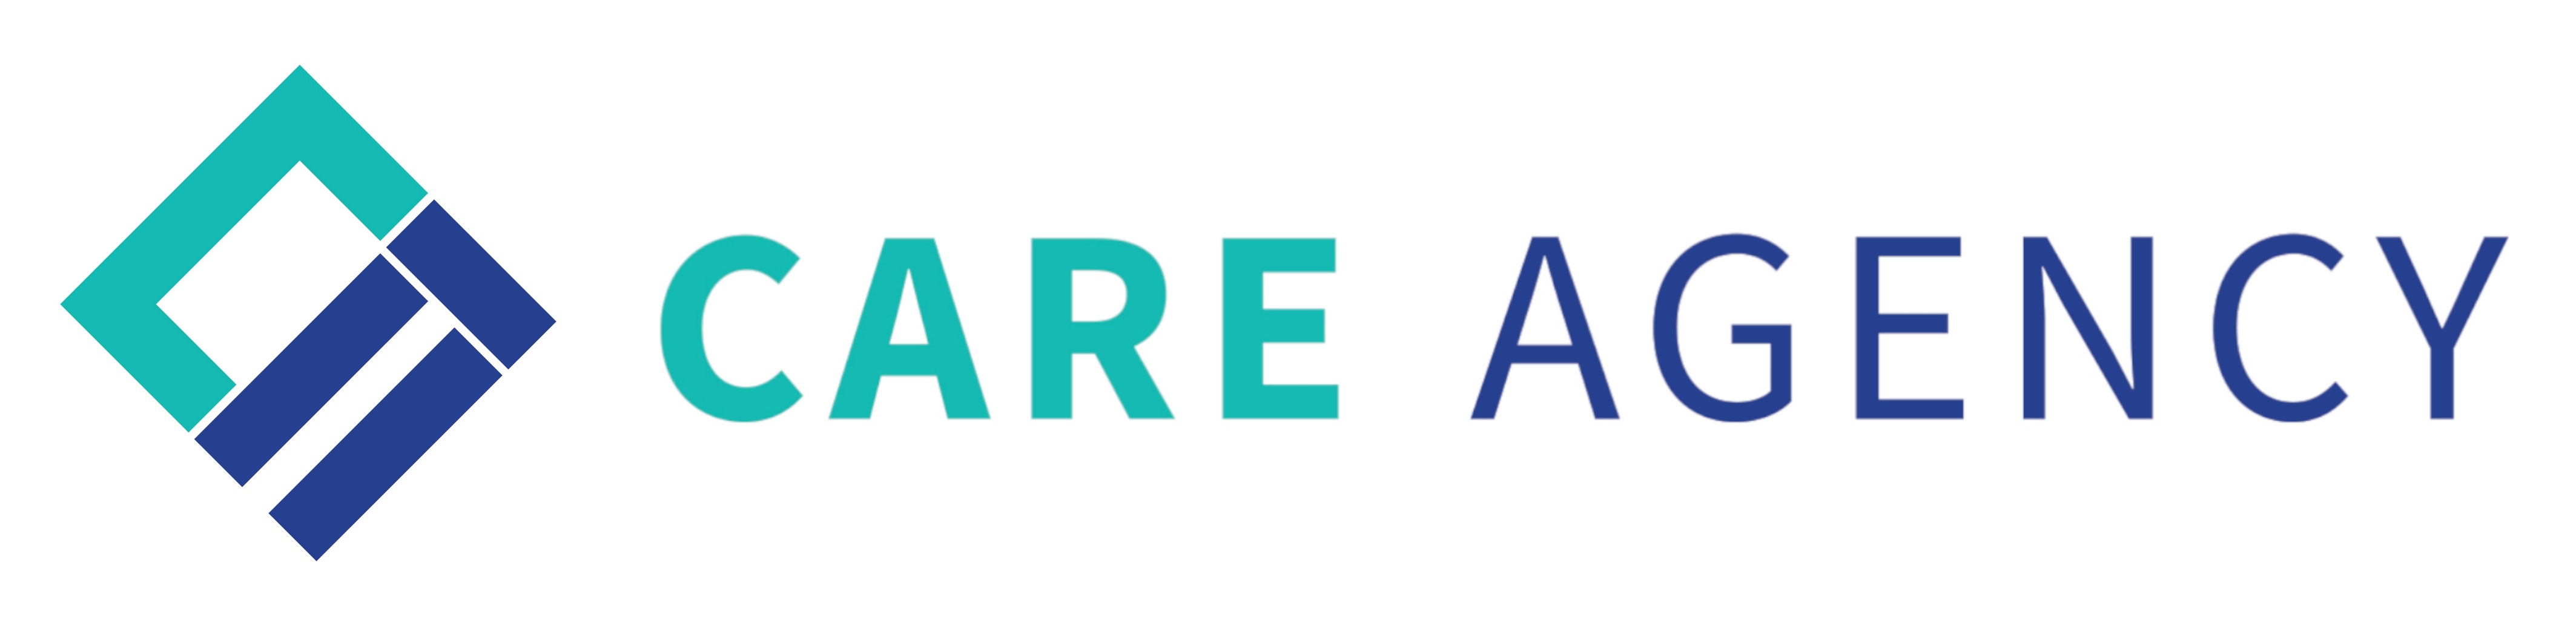 Care-Agency-Logo